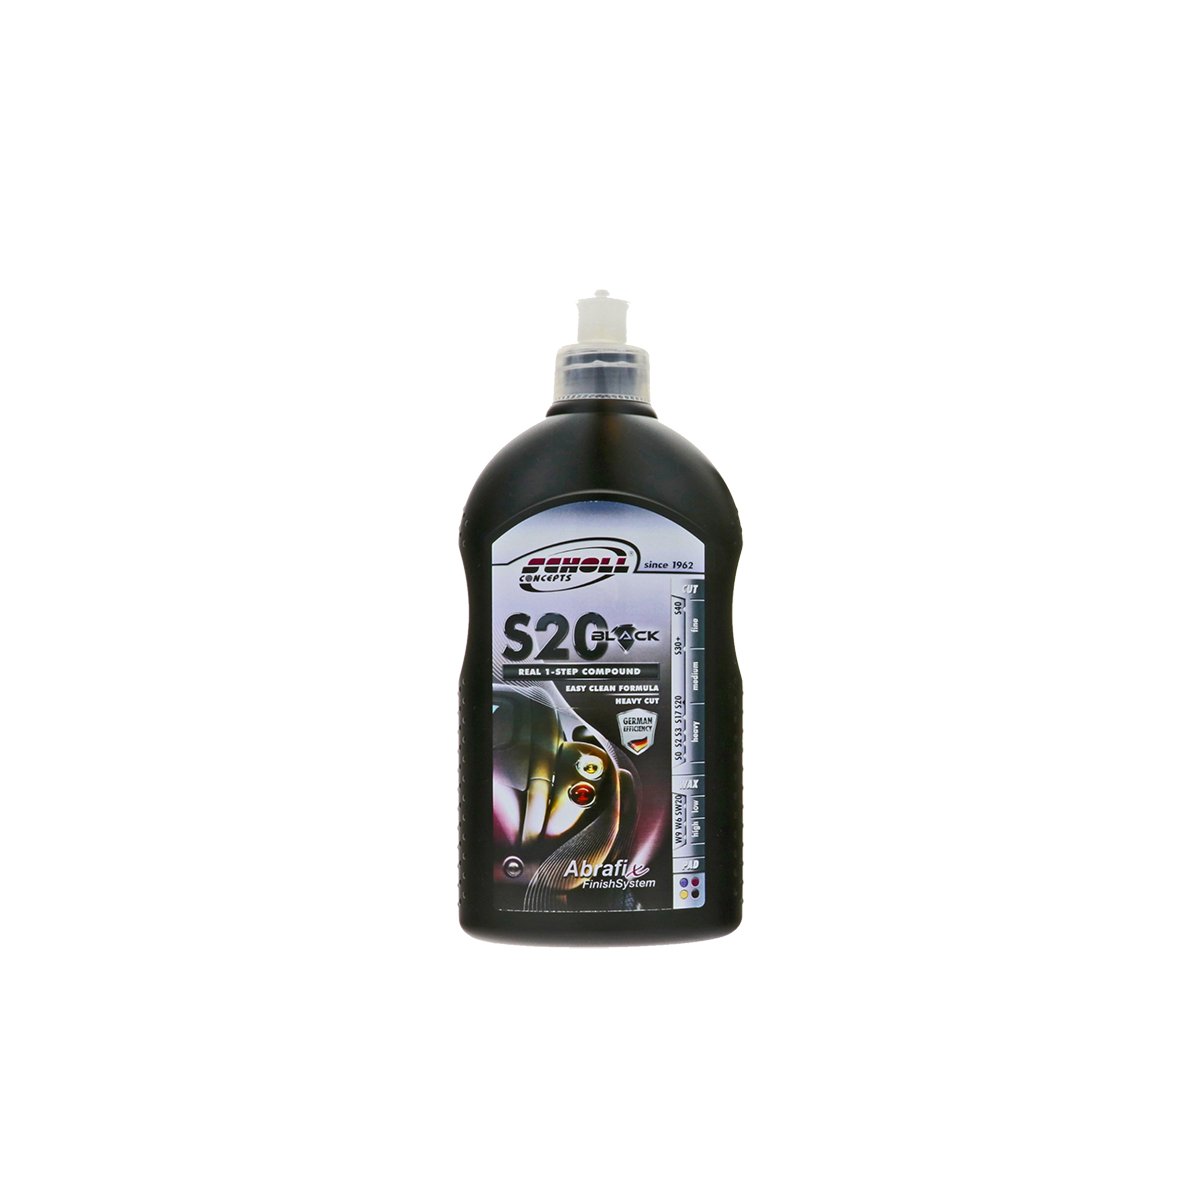 S20 Black 1-step Compound - 250gram